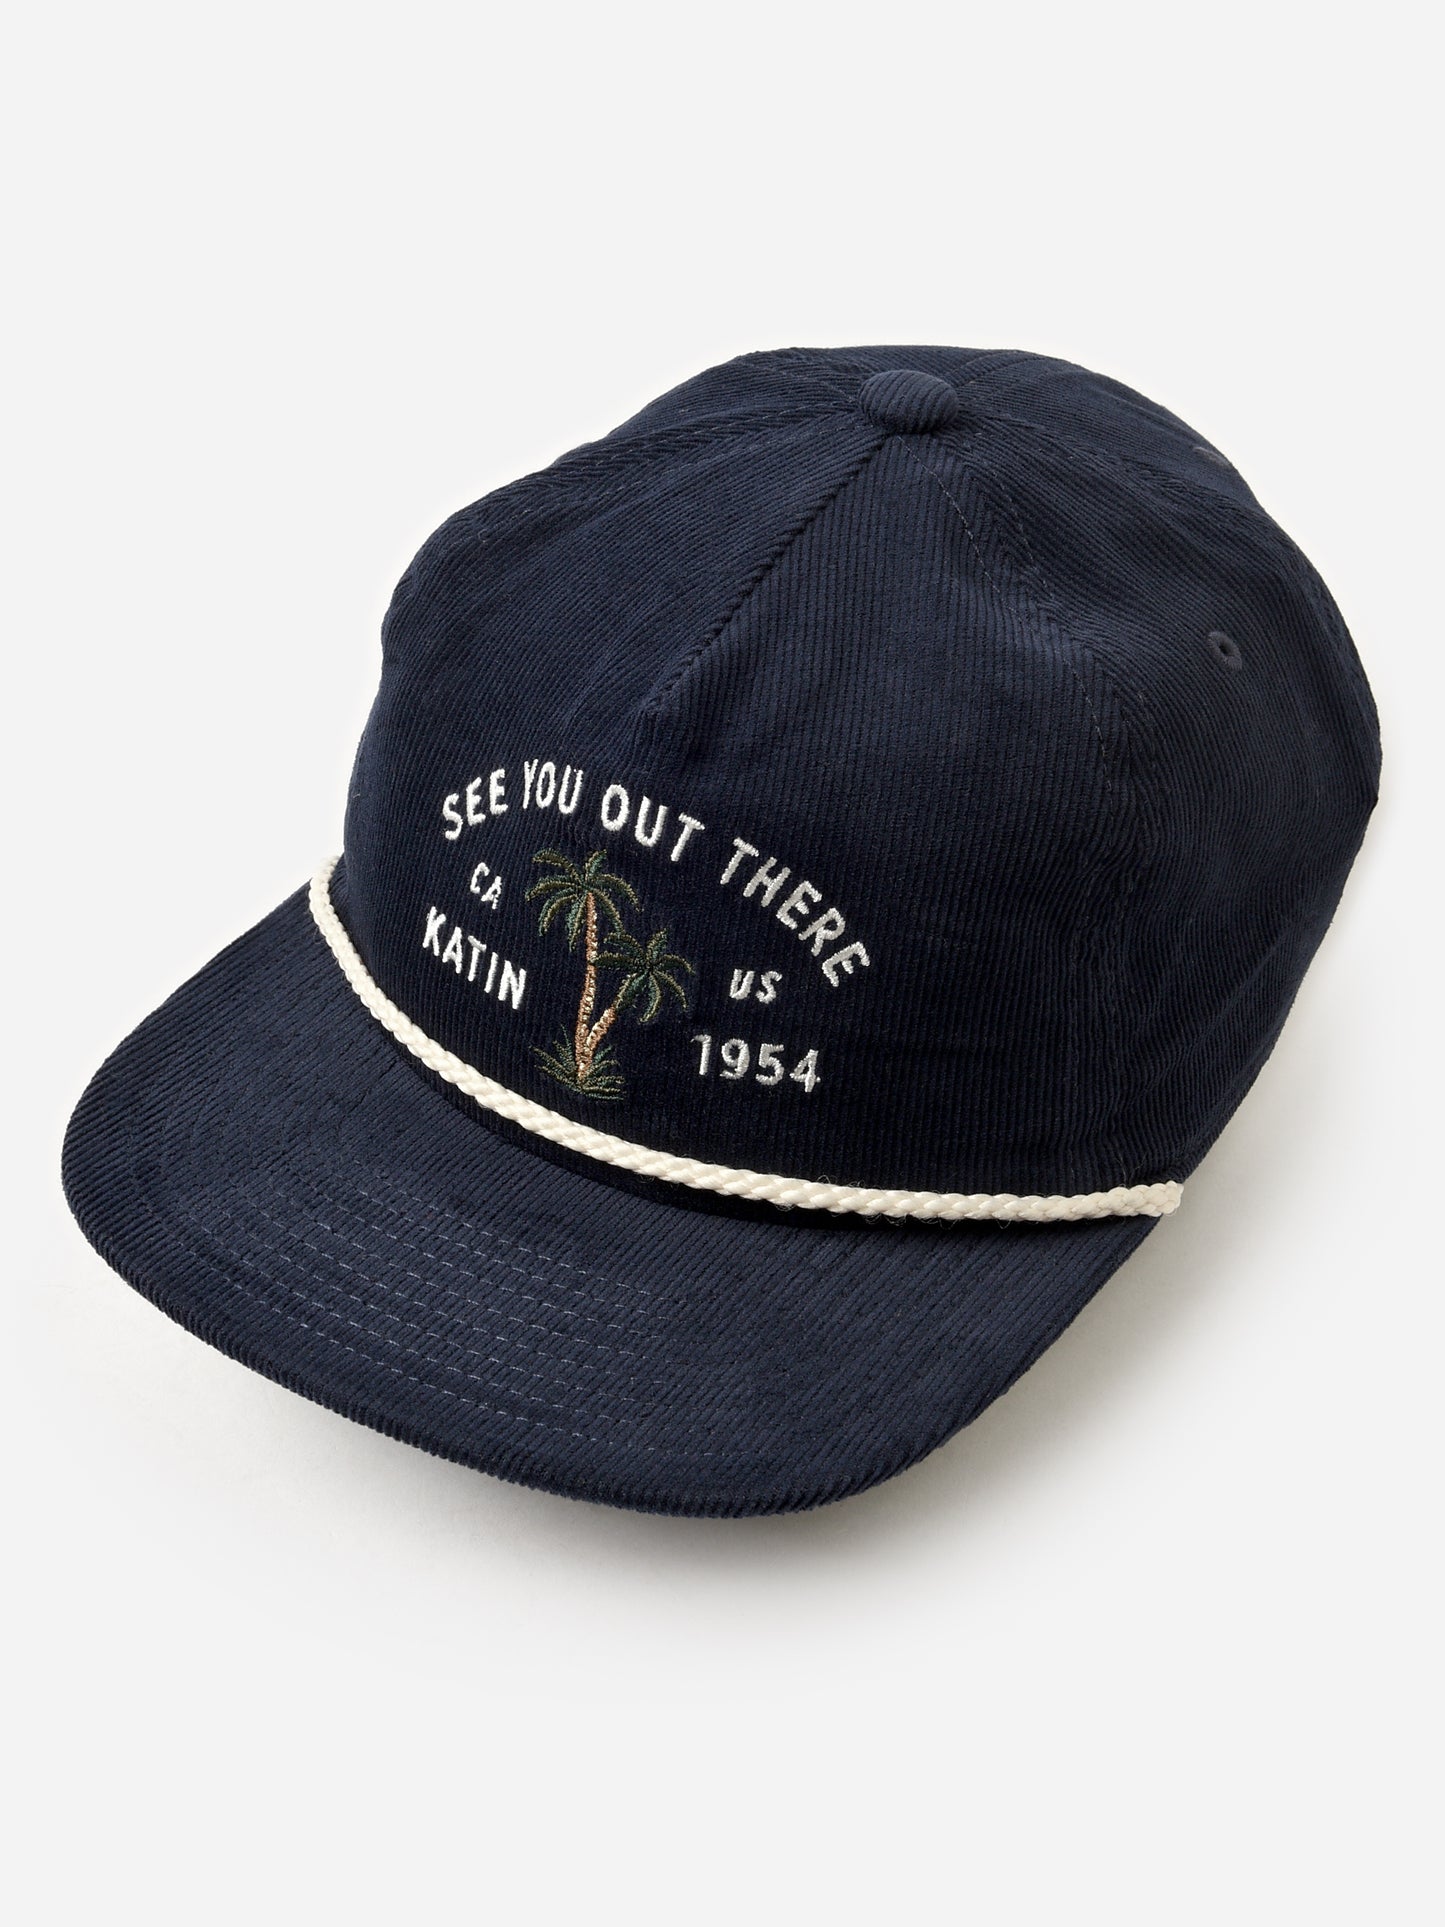 Katin Men's Bermuda Hat